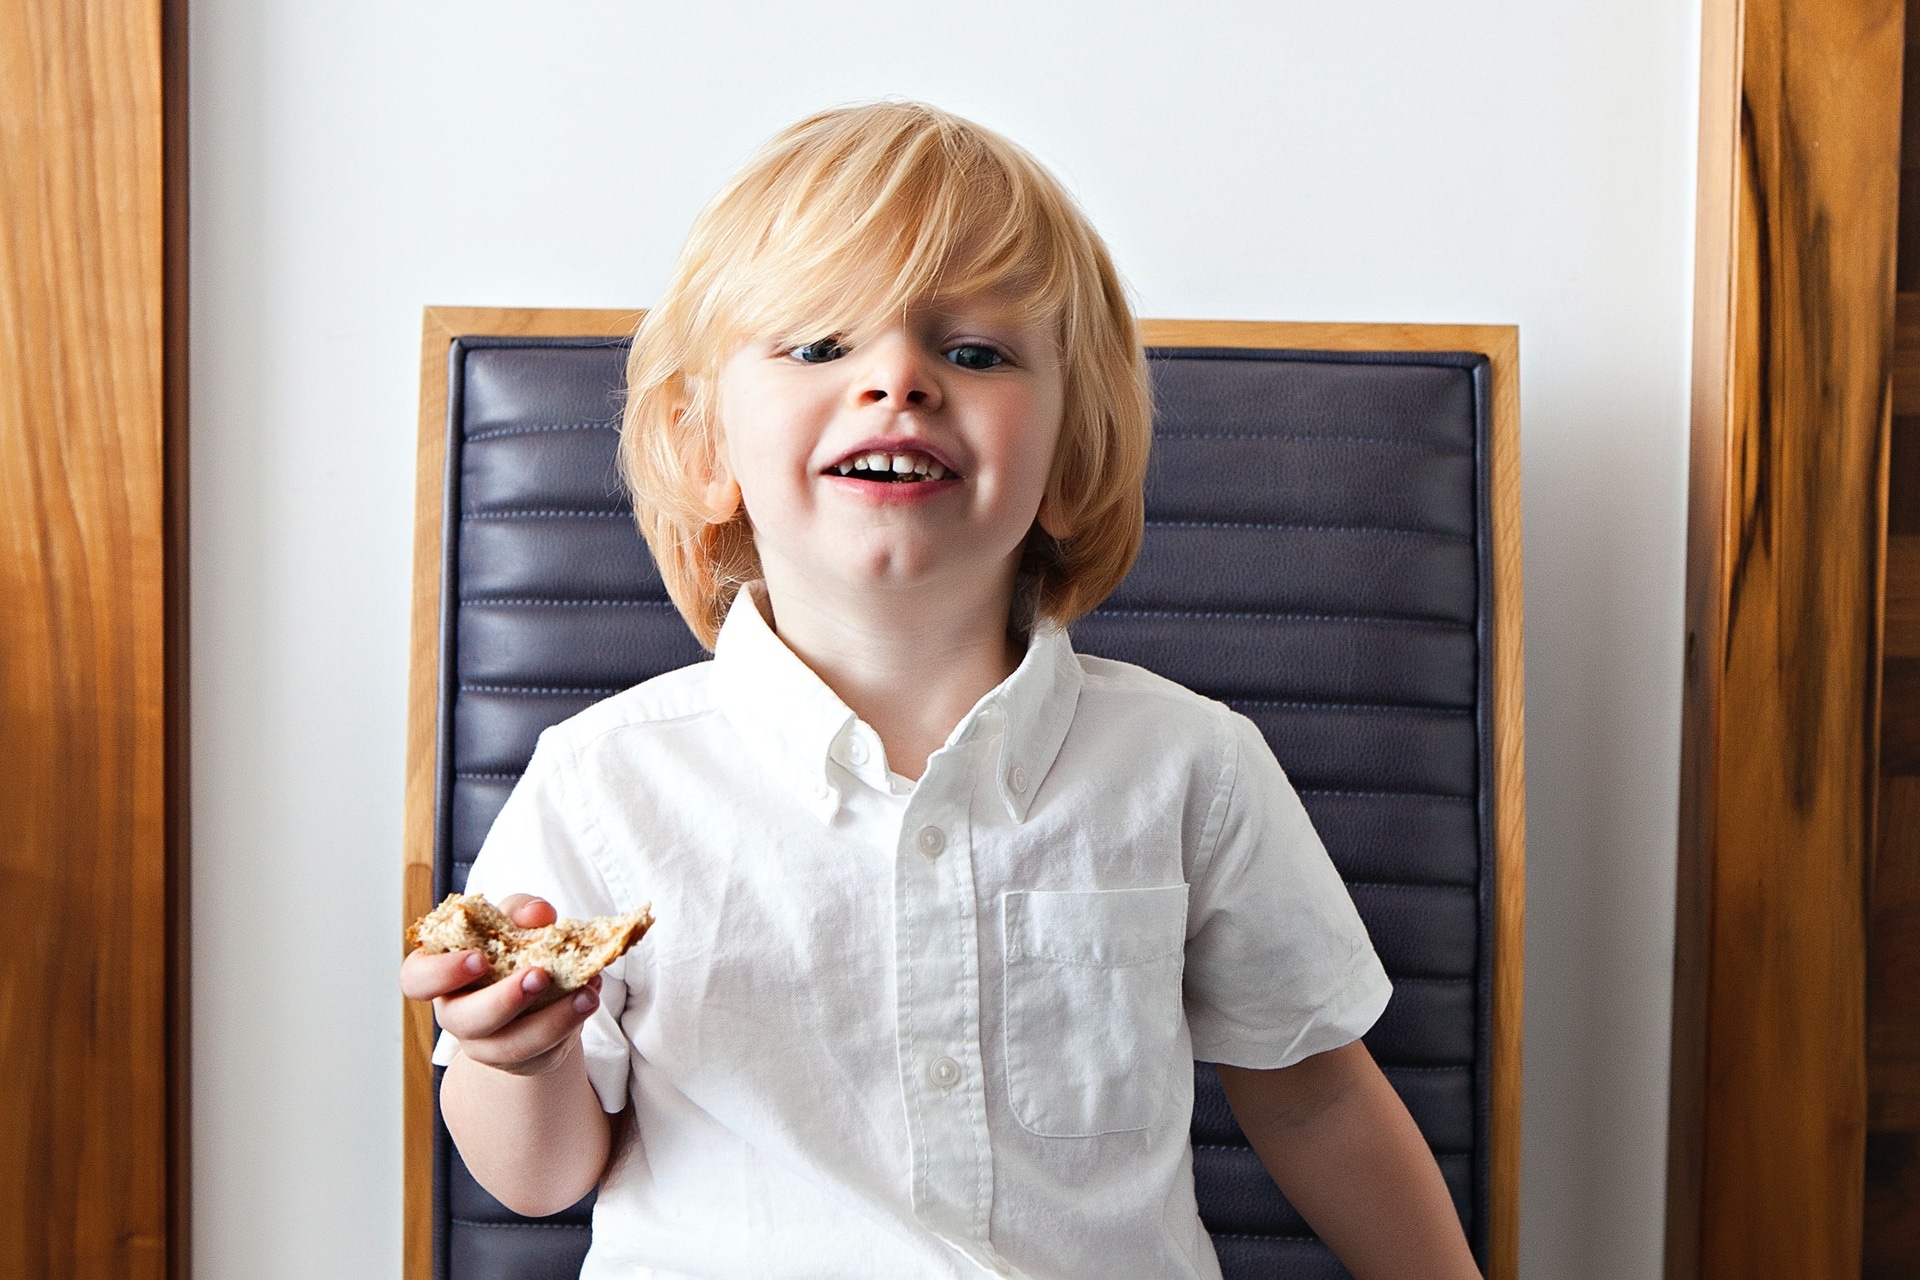 little boy holding a snack